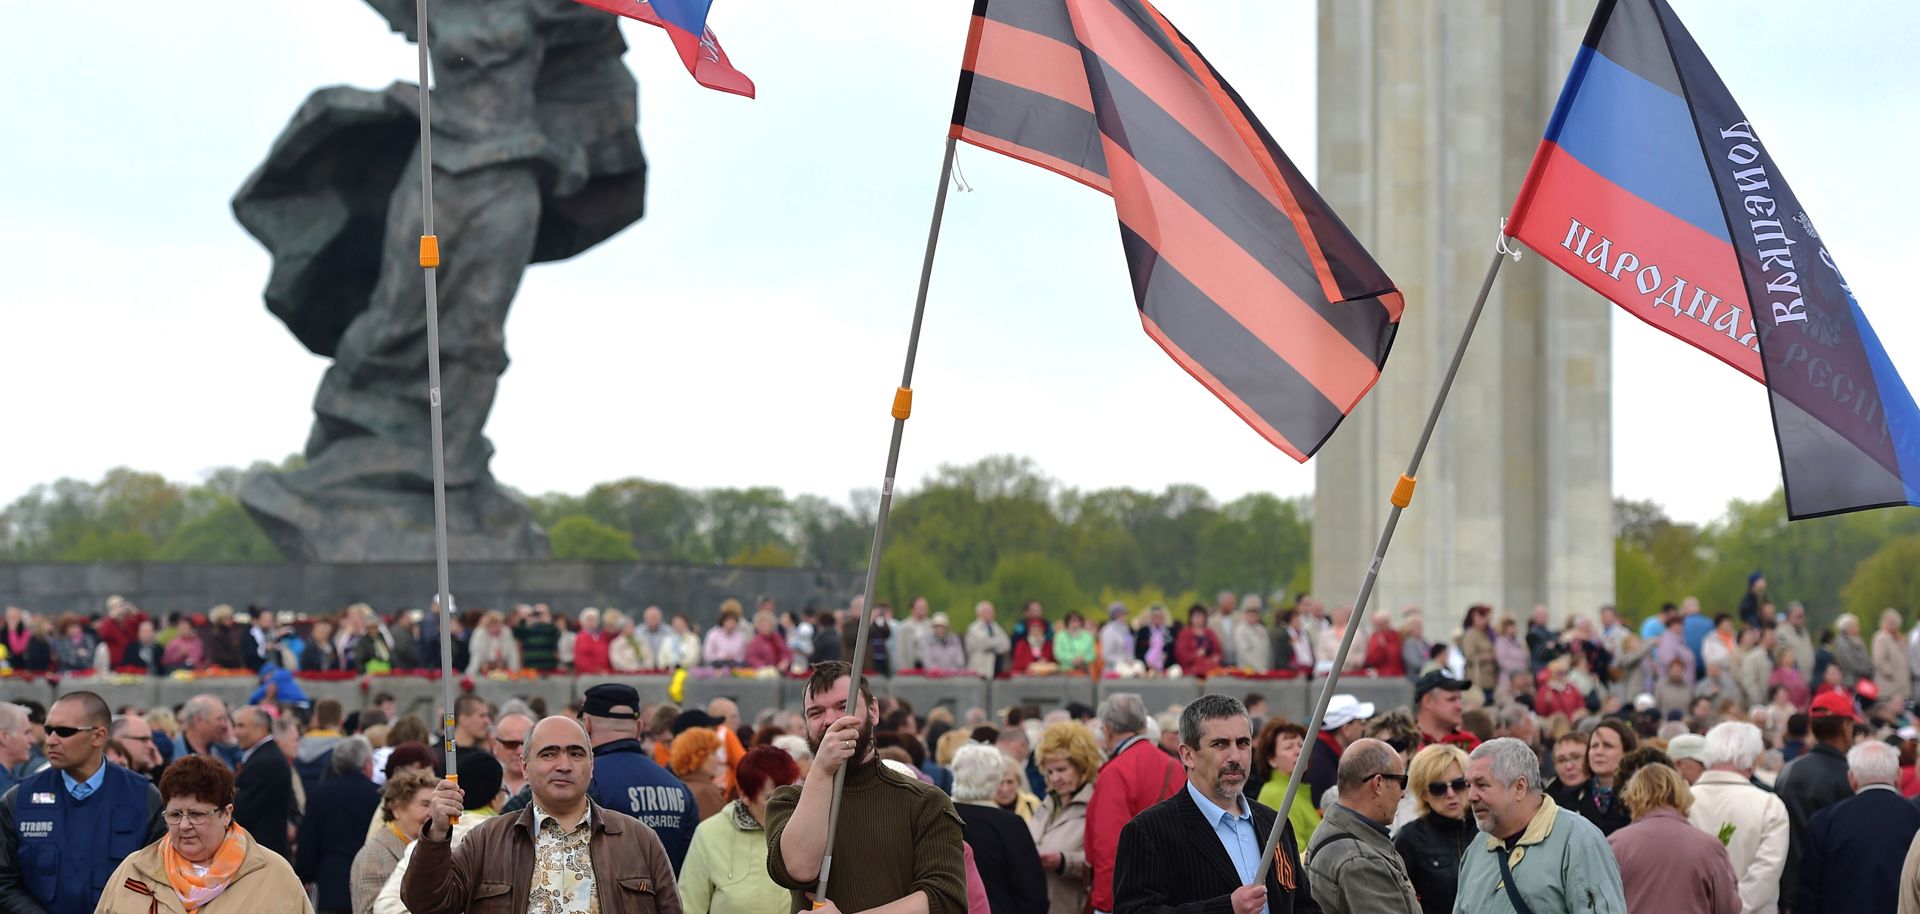 Pro-Russian Activity Raises Concerns in Latvia